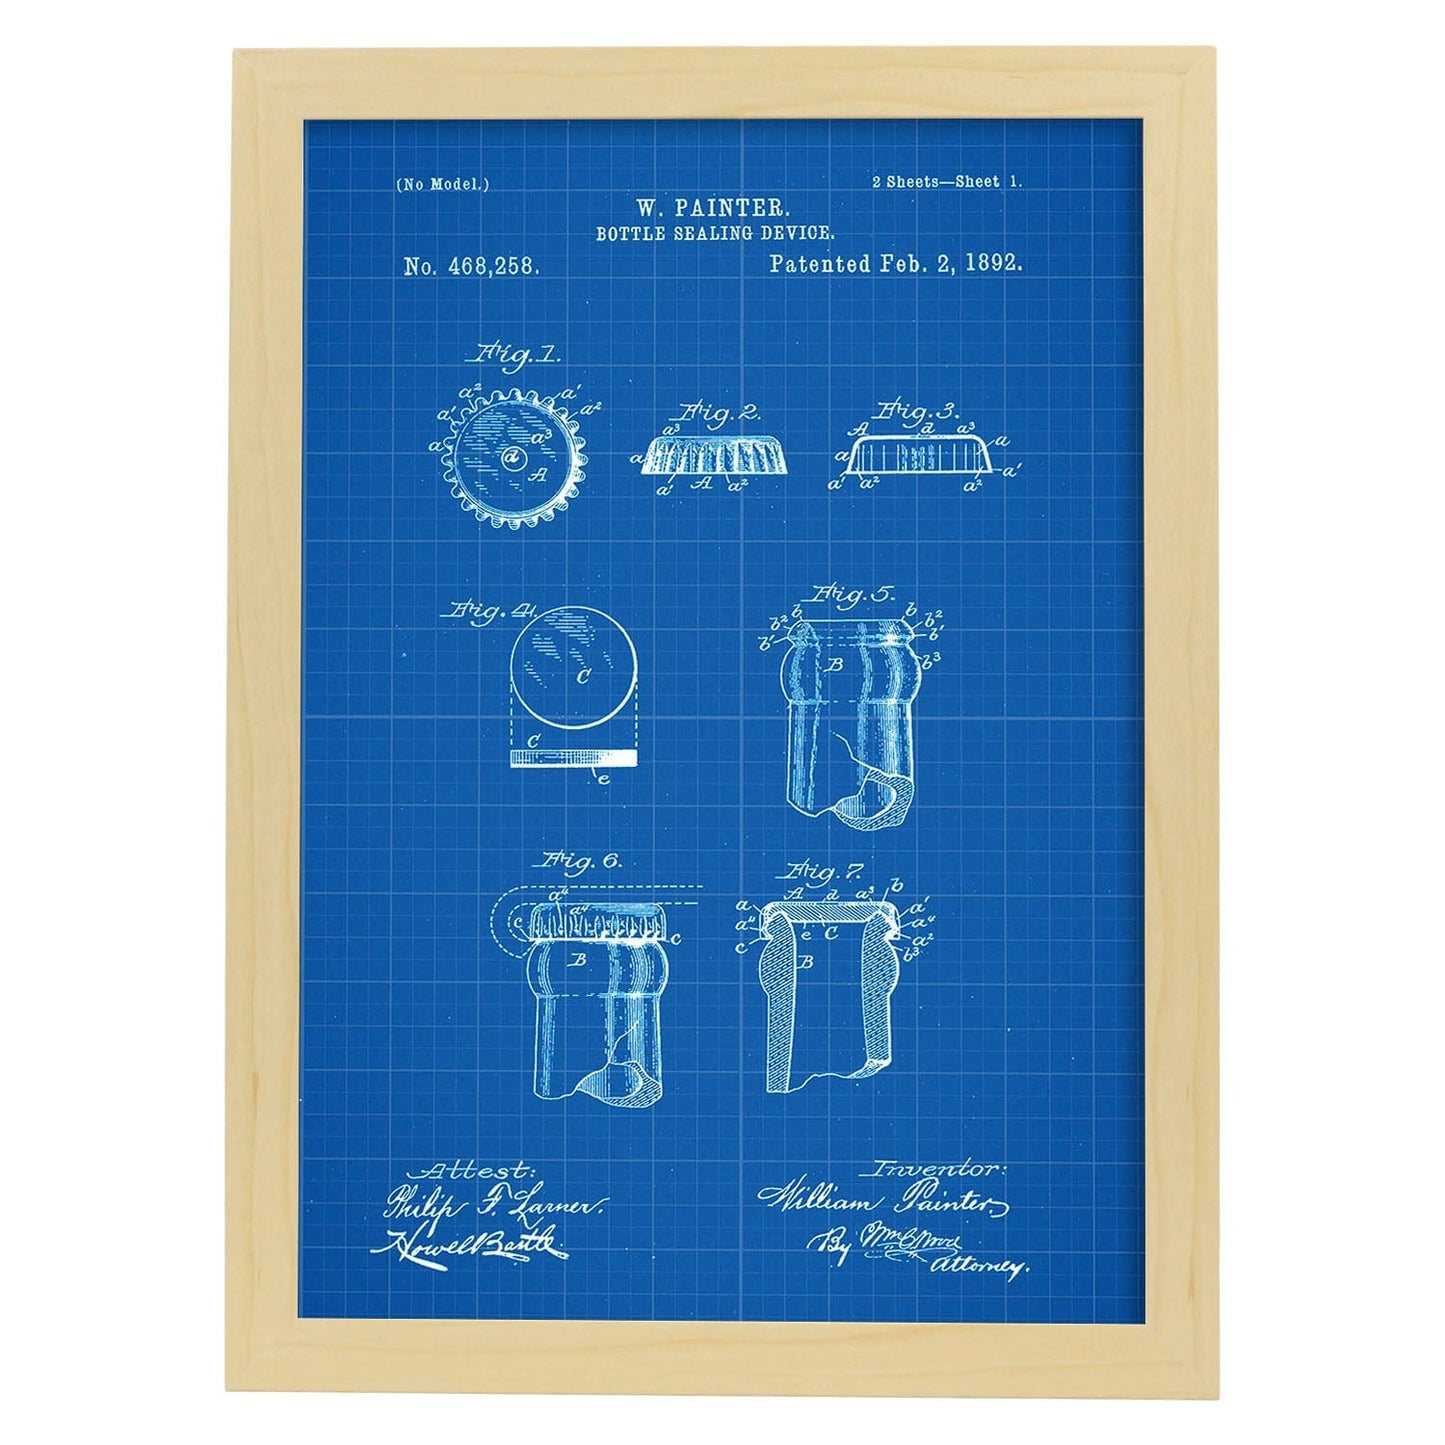 Poster con patente de Chapa de botella. Lámina con diseño de patente antigua-Artwork-Nacnic-A4-Marco Madera clara-Nacnic Estudio SL